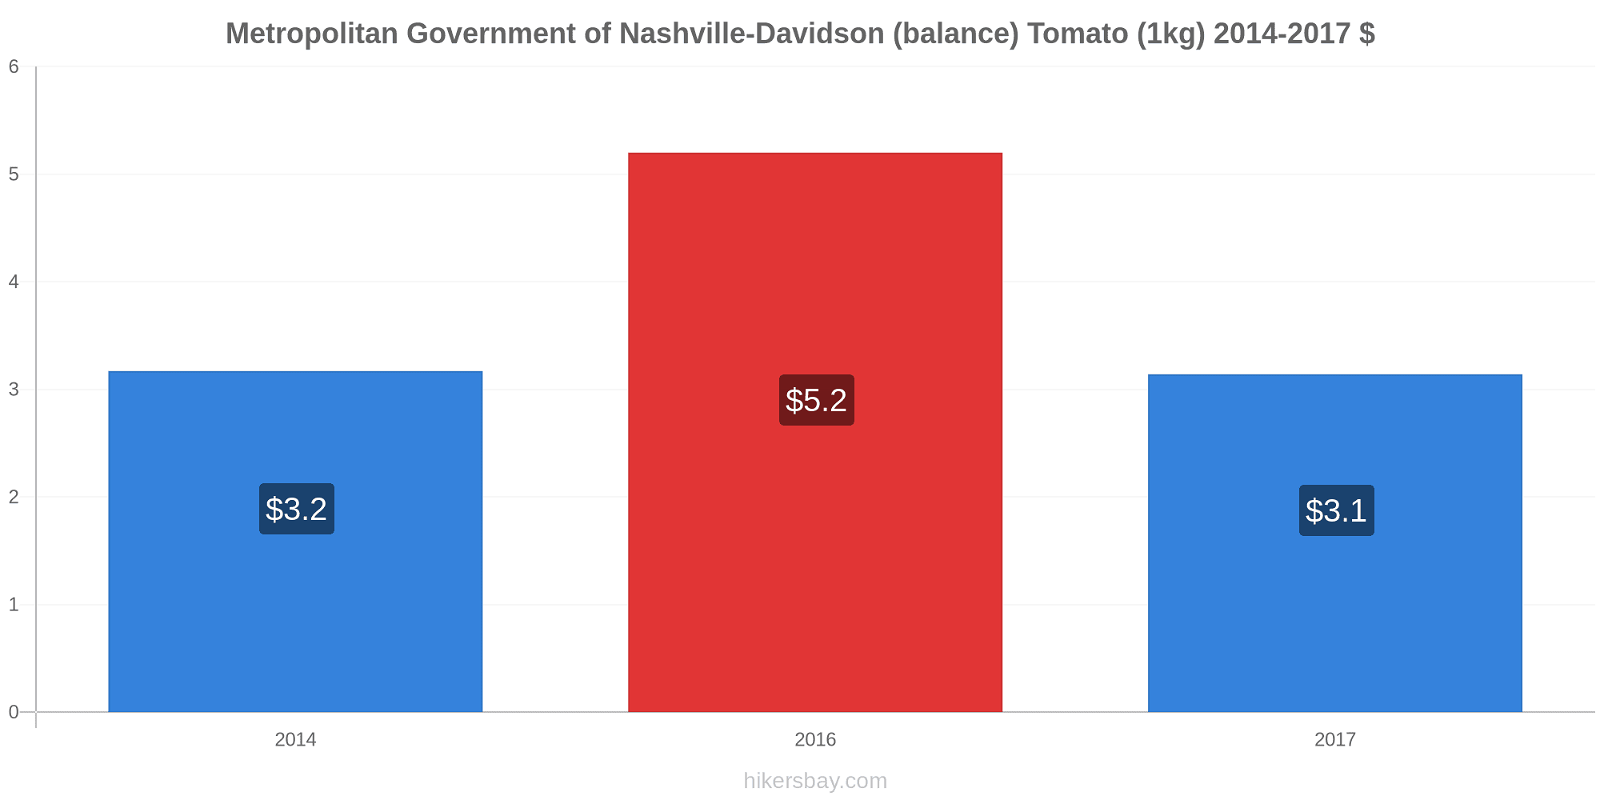 Metropolitan Government of Nashville-Davidson (balance) price changes Tomato (1kg) hikersbay.com